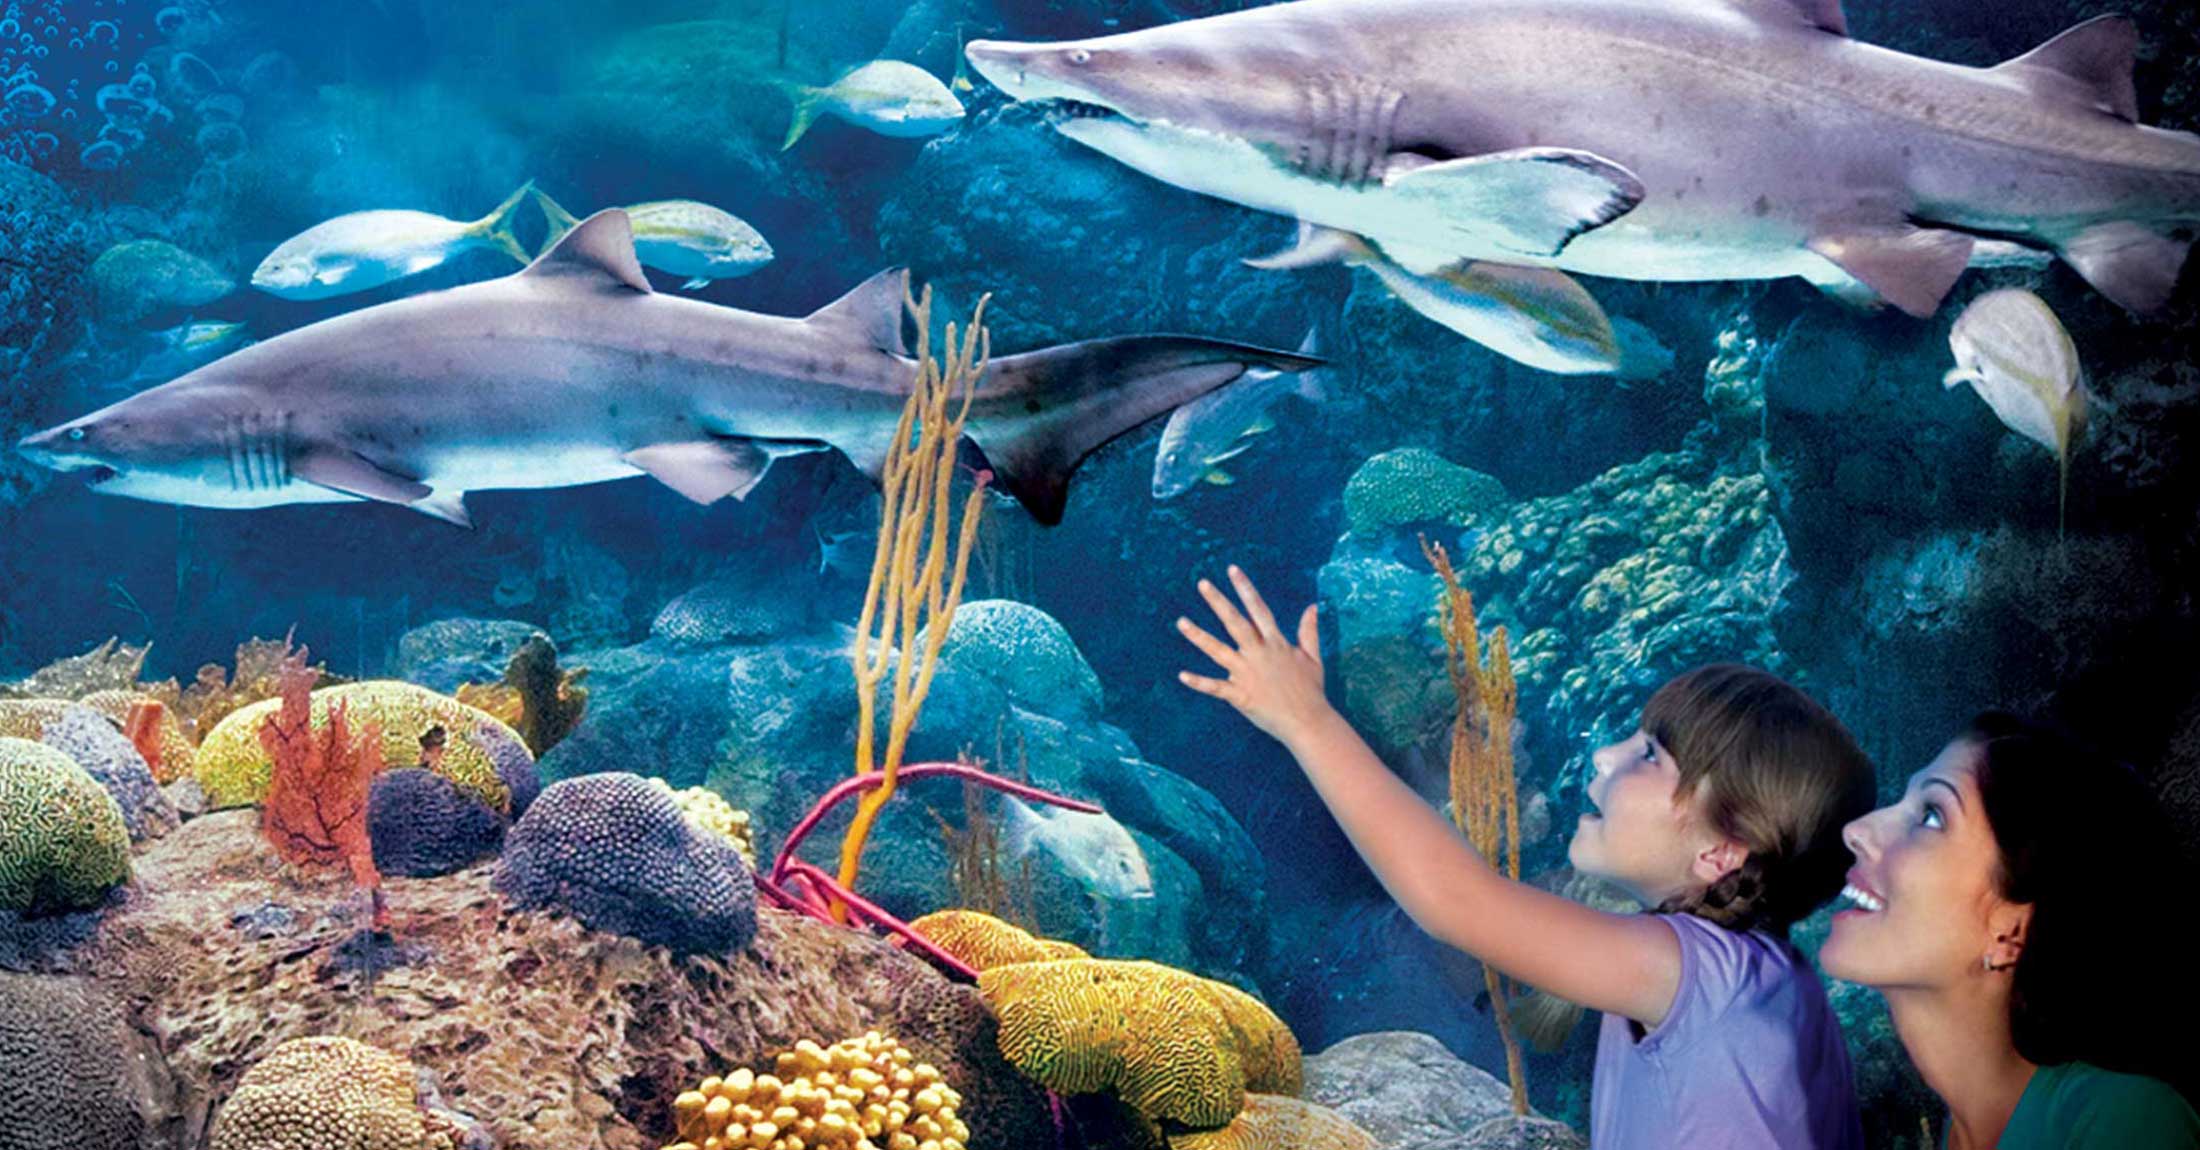 mother and child admiring tank full of fish and sharks at florida aquarium